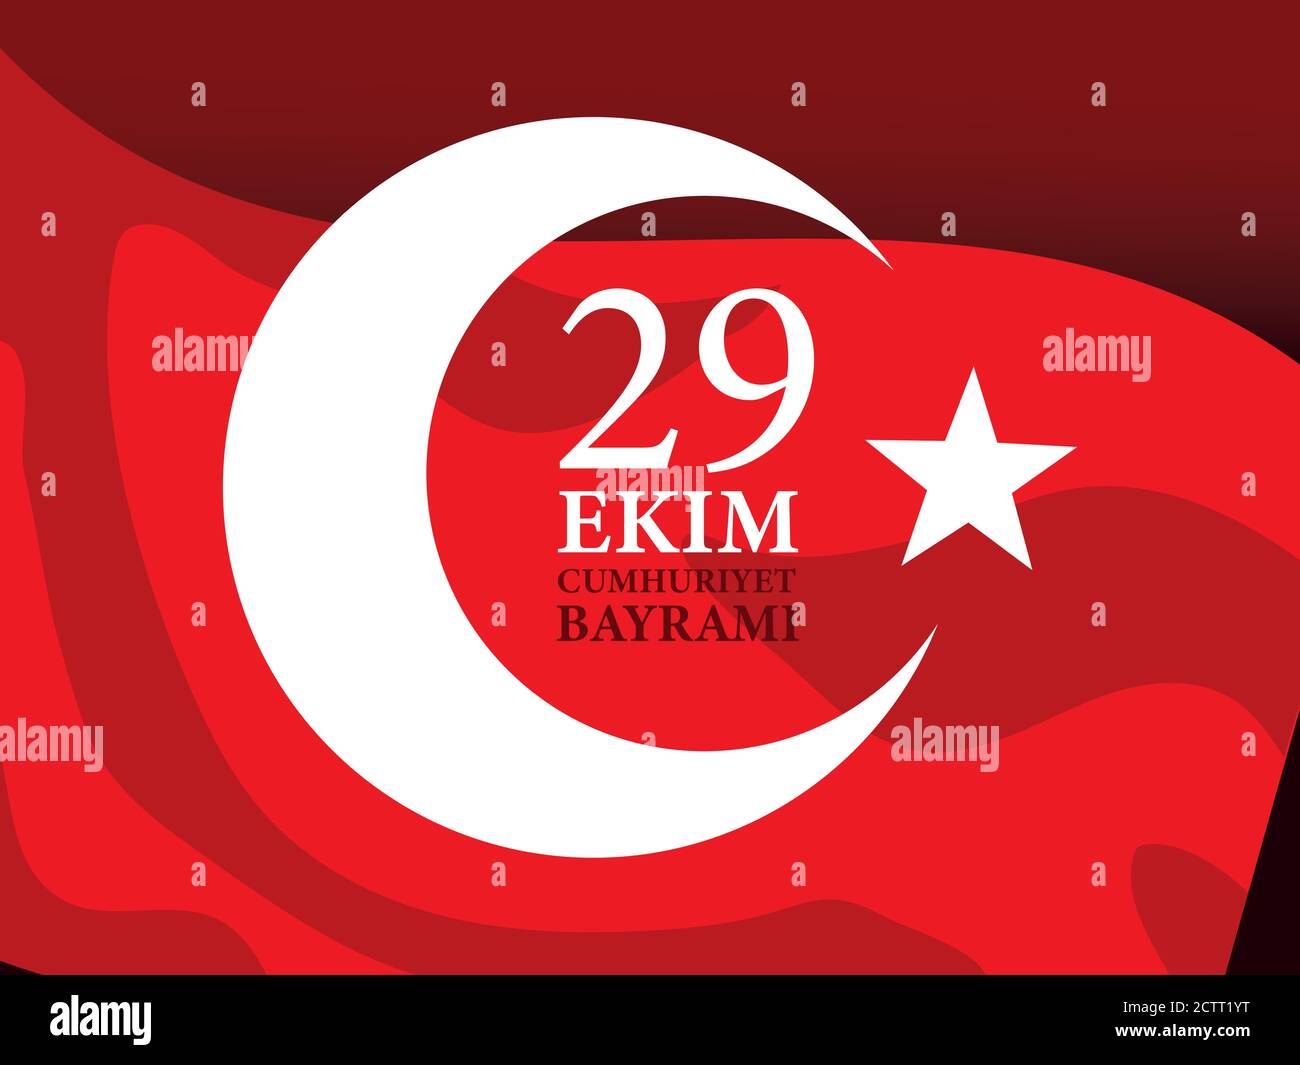 29 ekim cumhuriyet bayrami with turkish red flag design, Turkey and republic theme Vector illustration Stock Vector